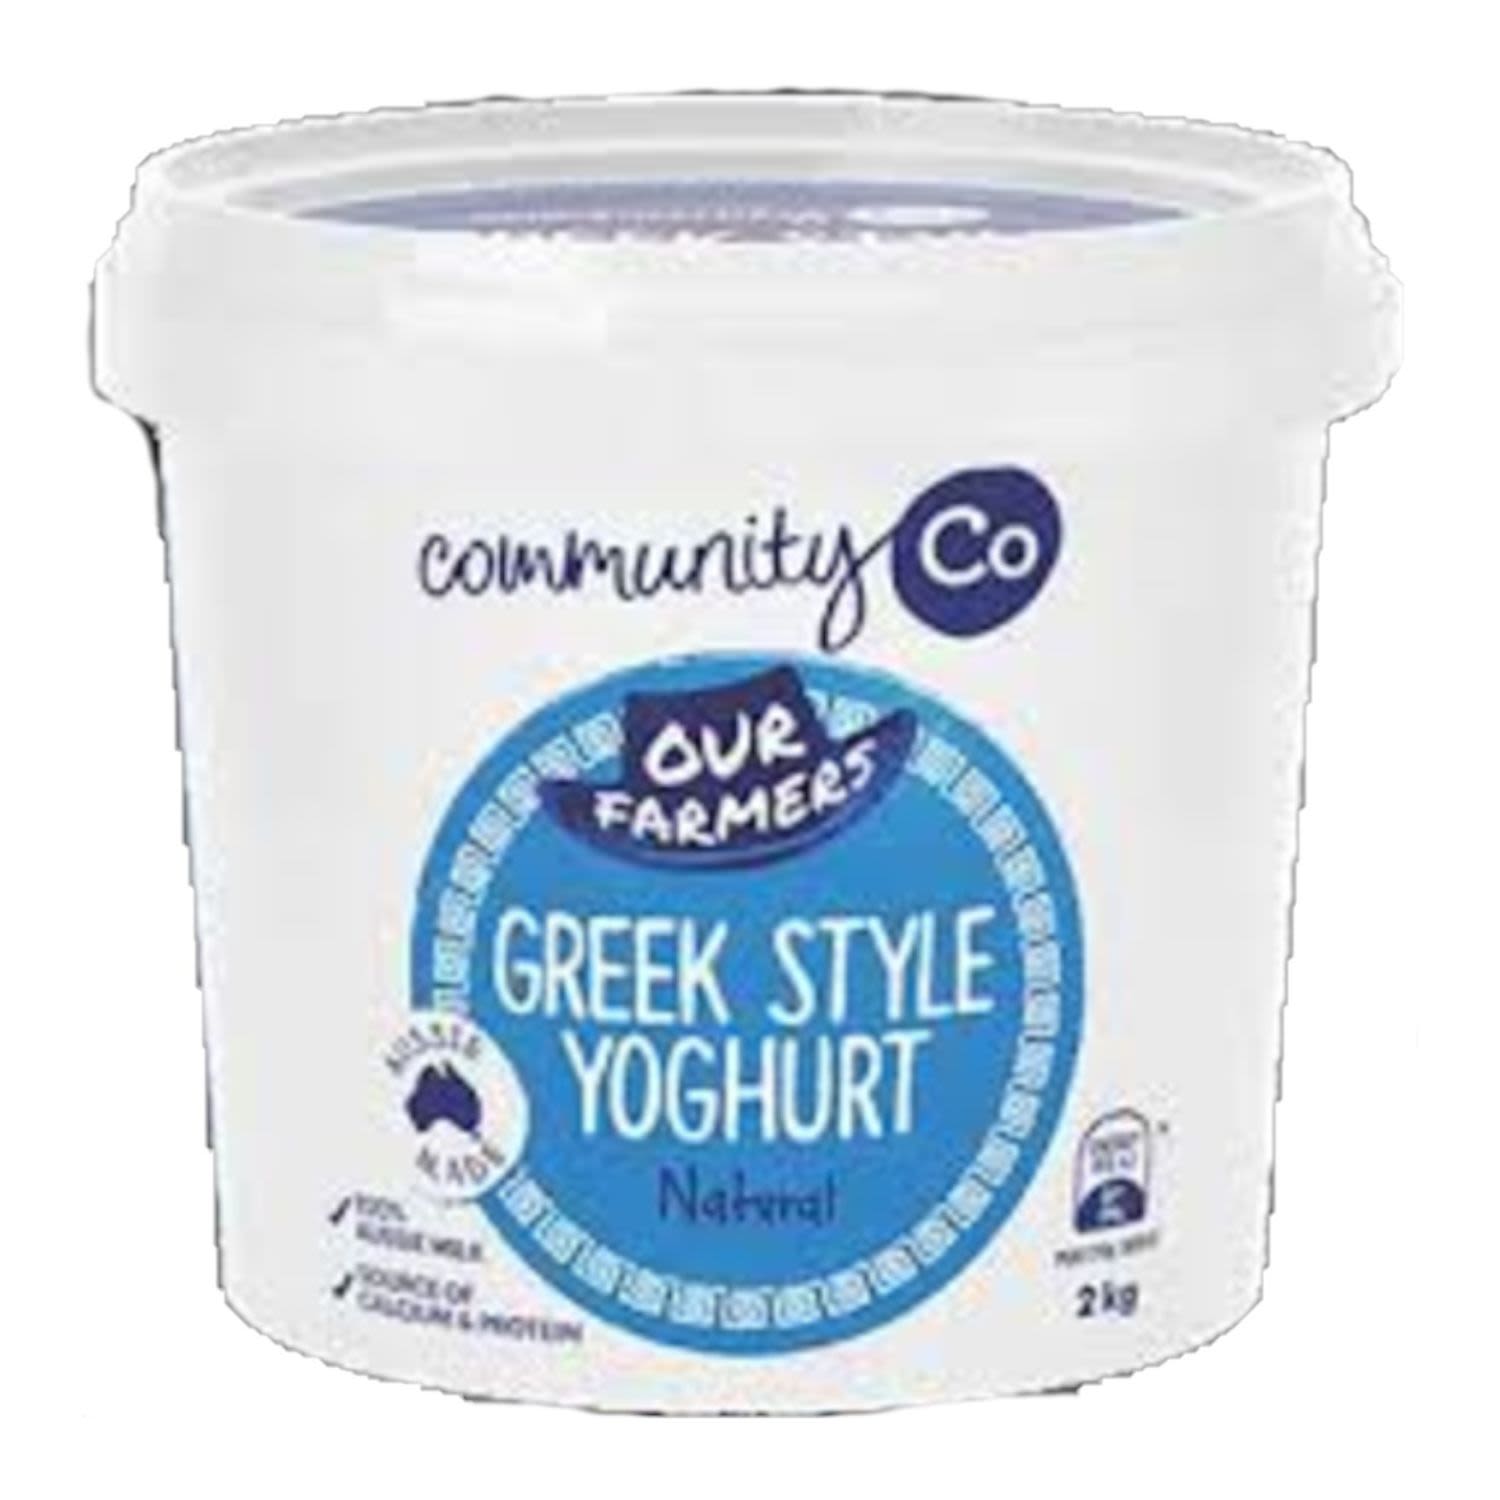 Community Co Greek Style Yoghurt, 2 Kilogram